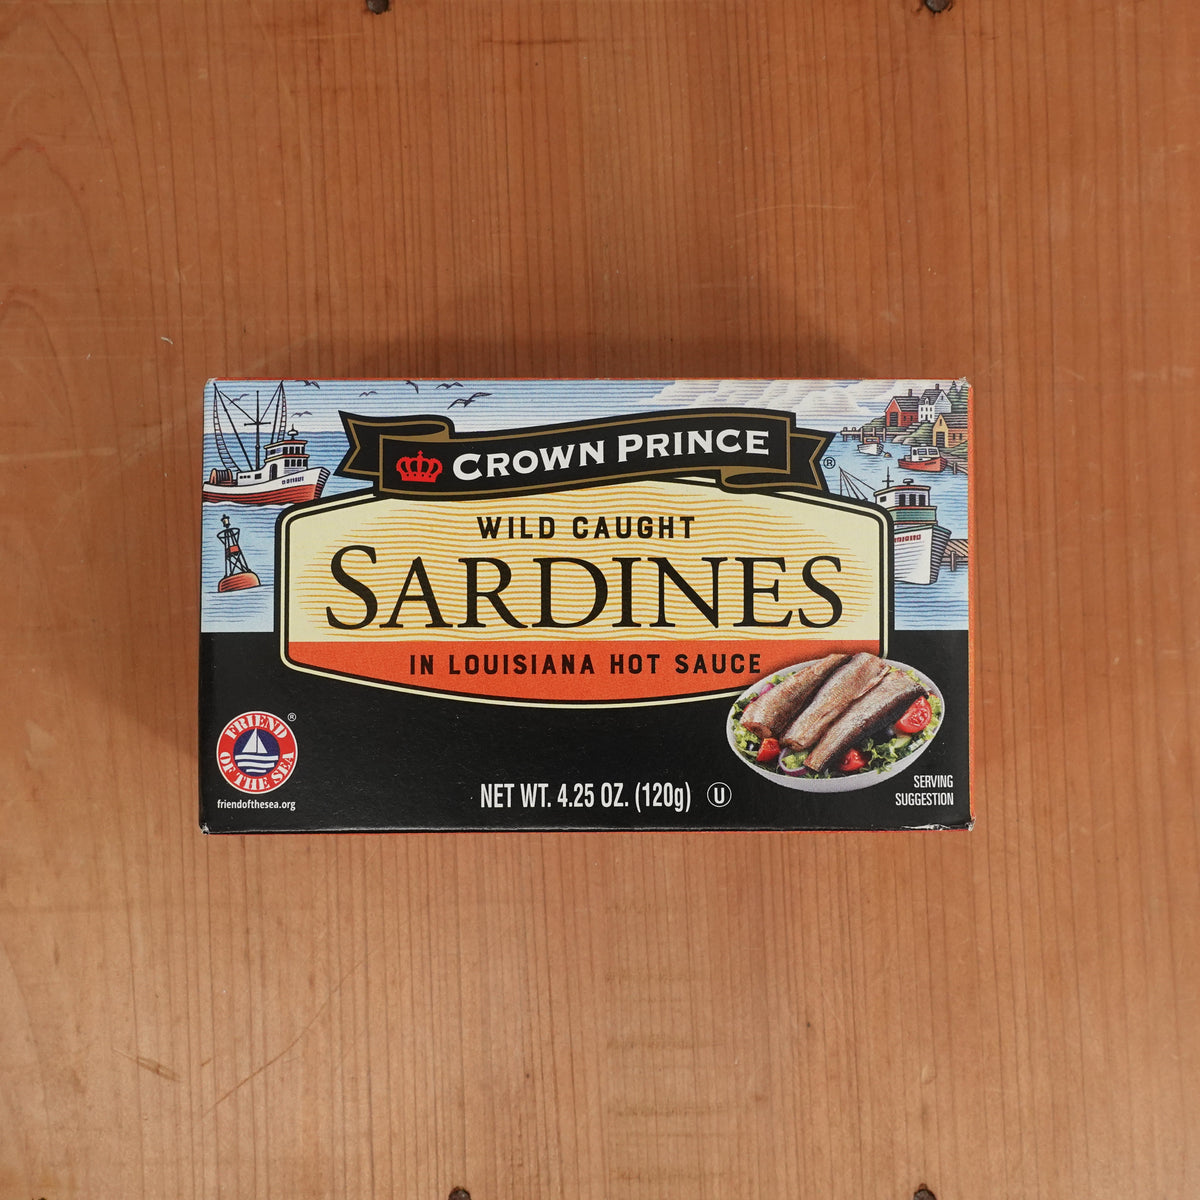 Crown Prince Wild Caught Sardines in Louisiana Hot Sauce - 4.25oz